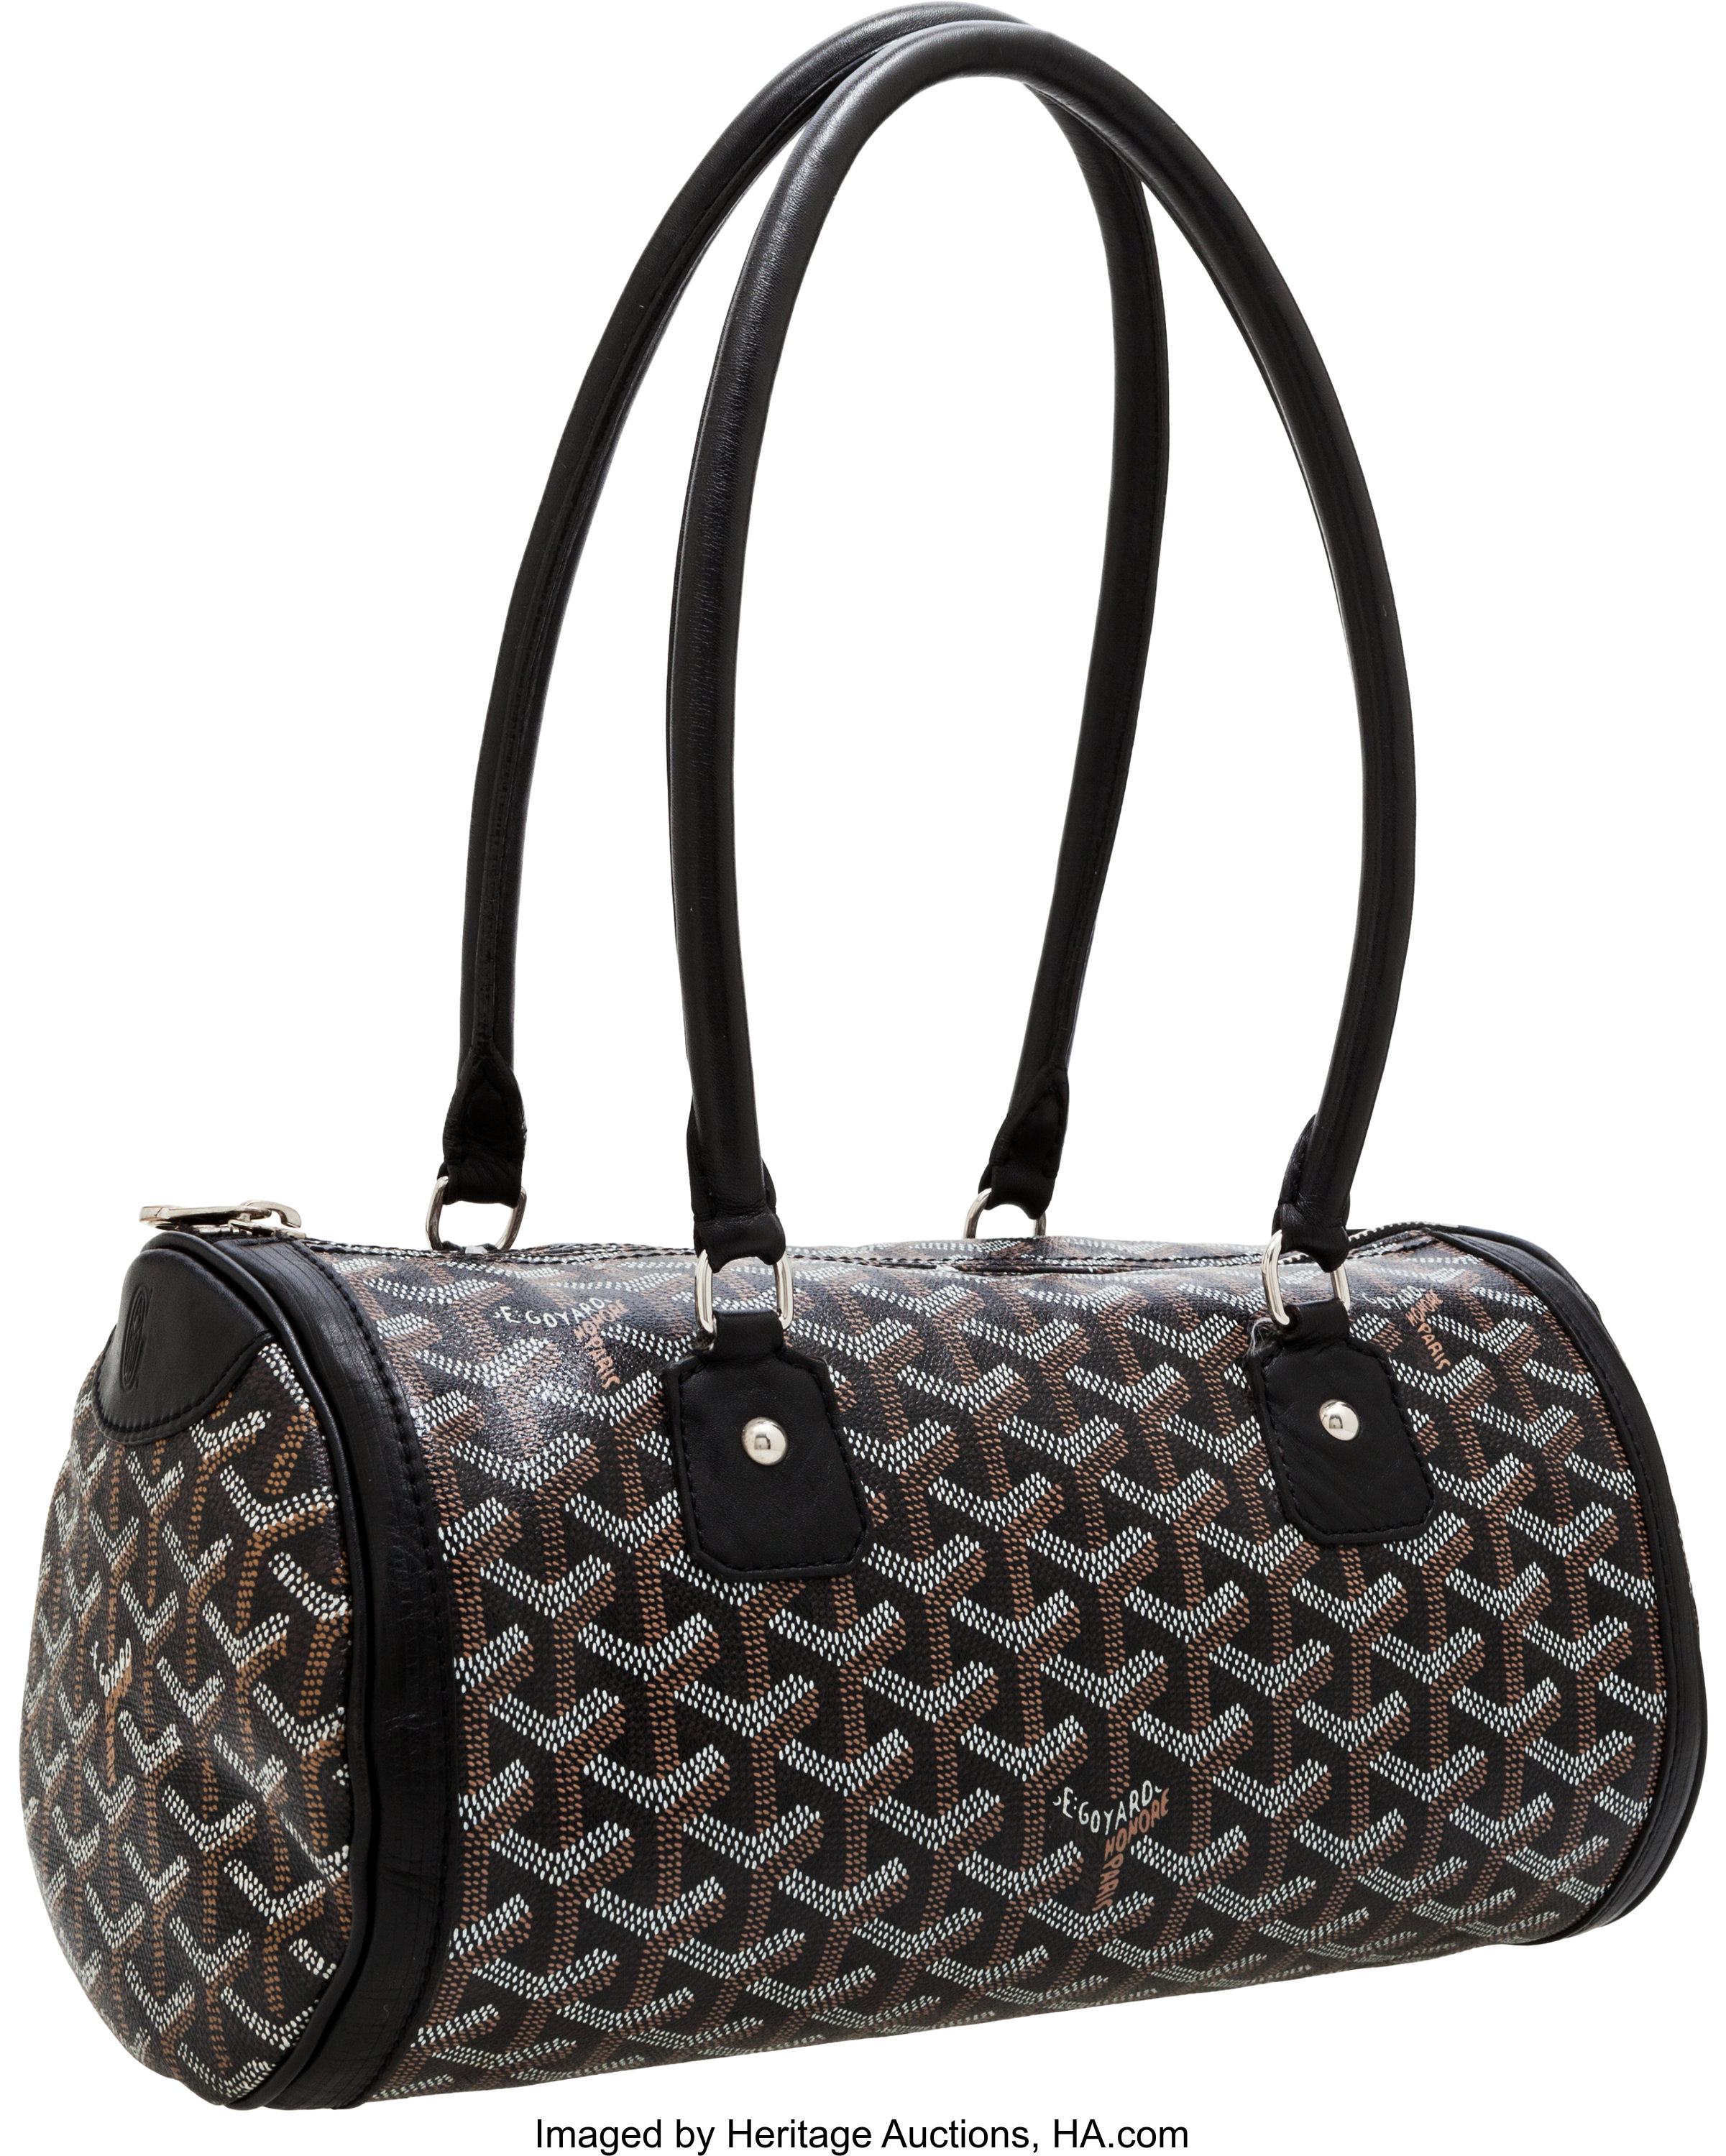 Goyard Bag Canvas Shopping Bag Ladies Handbag Shoulder for Sale in Indio,  CA - OfferUp